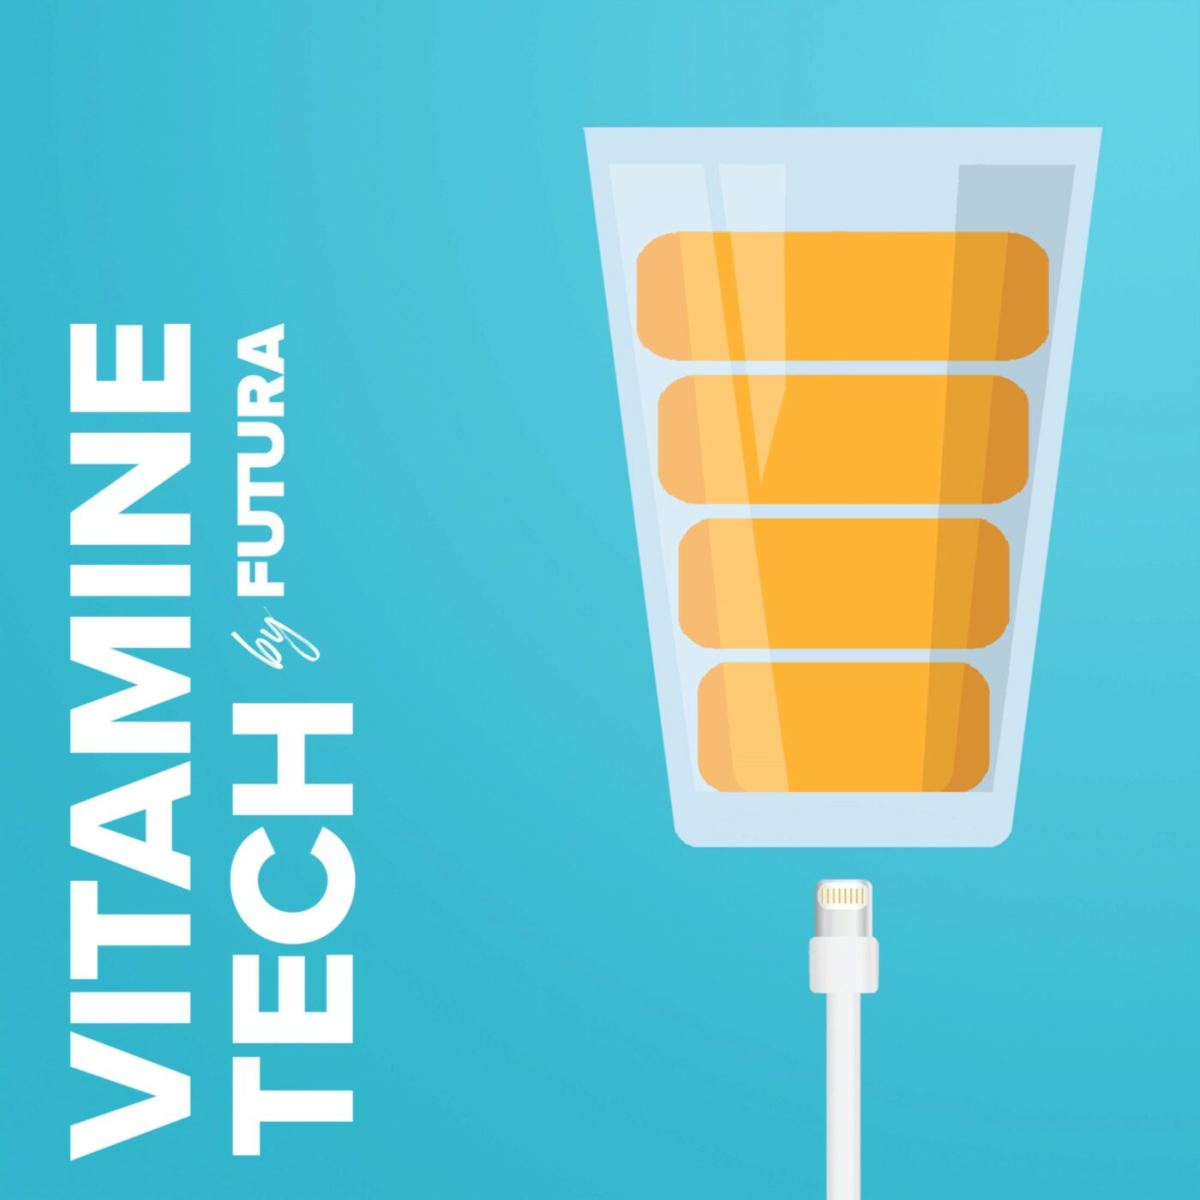 Vitamine Tech, le podcast de l'actu tech